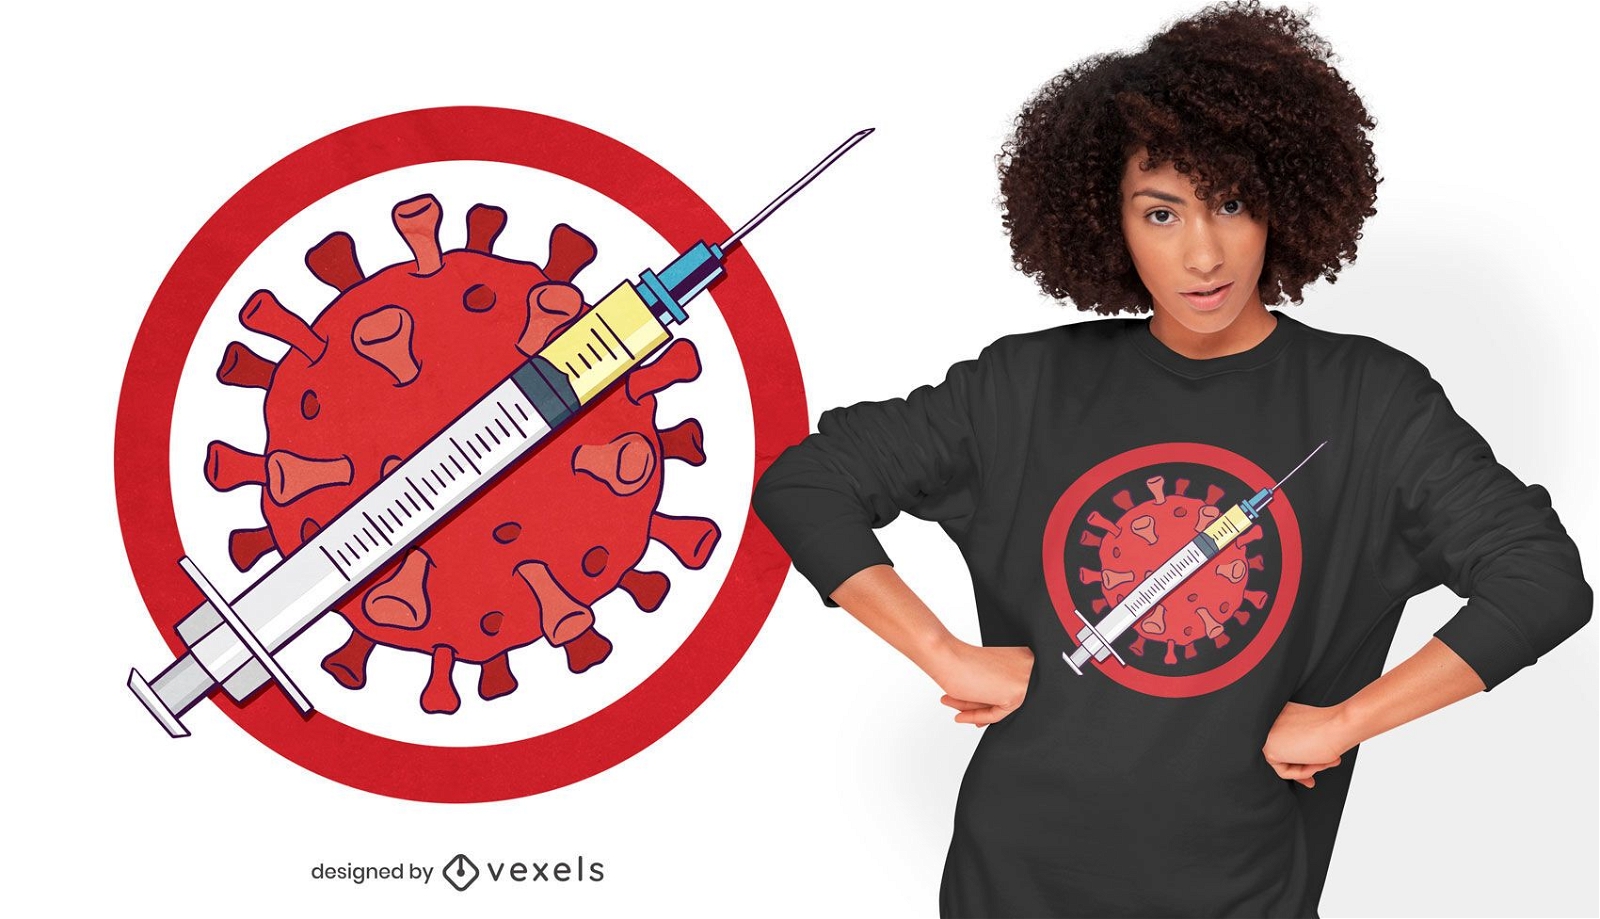 Sem v?rus design de t-shirt da vacina covid